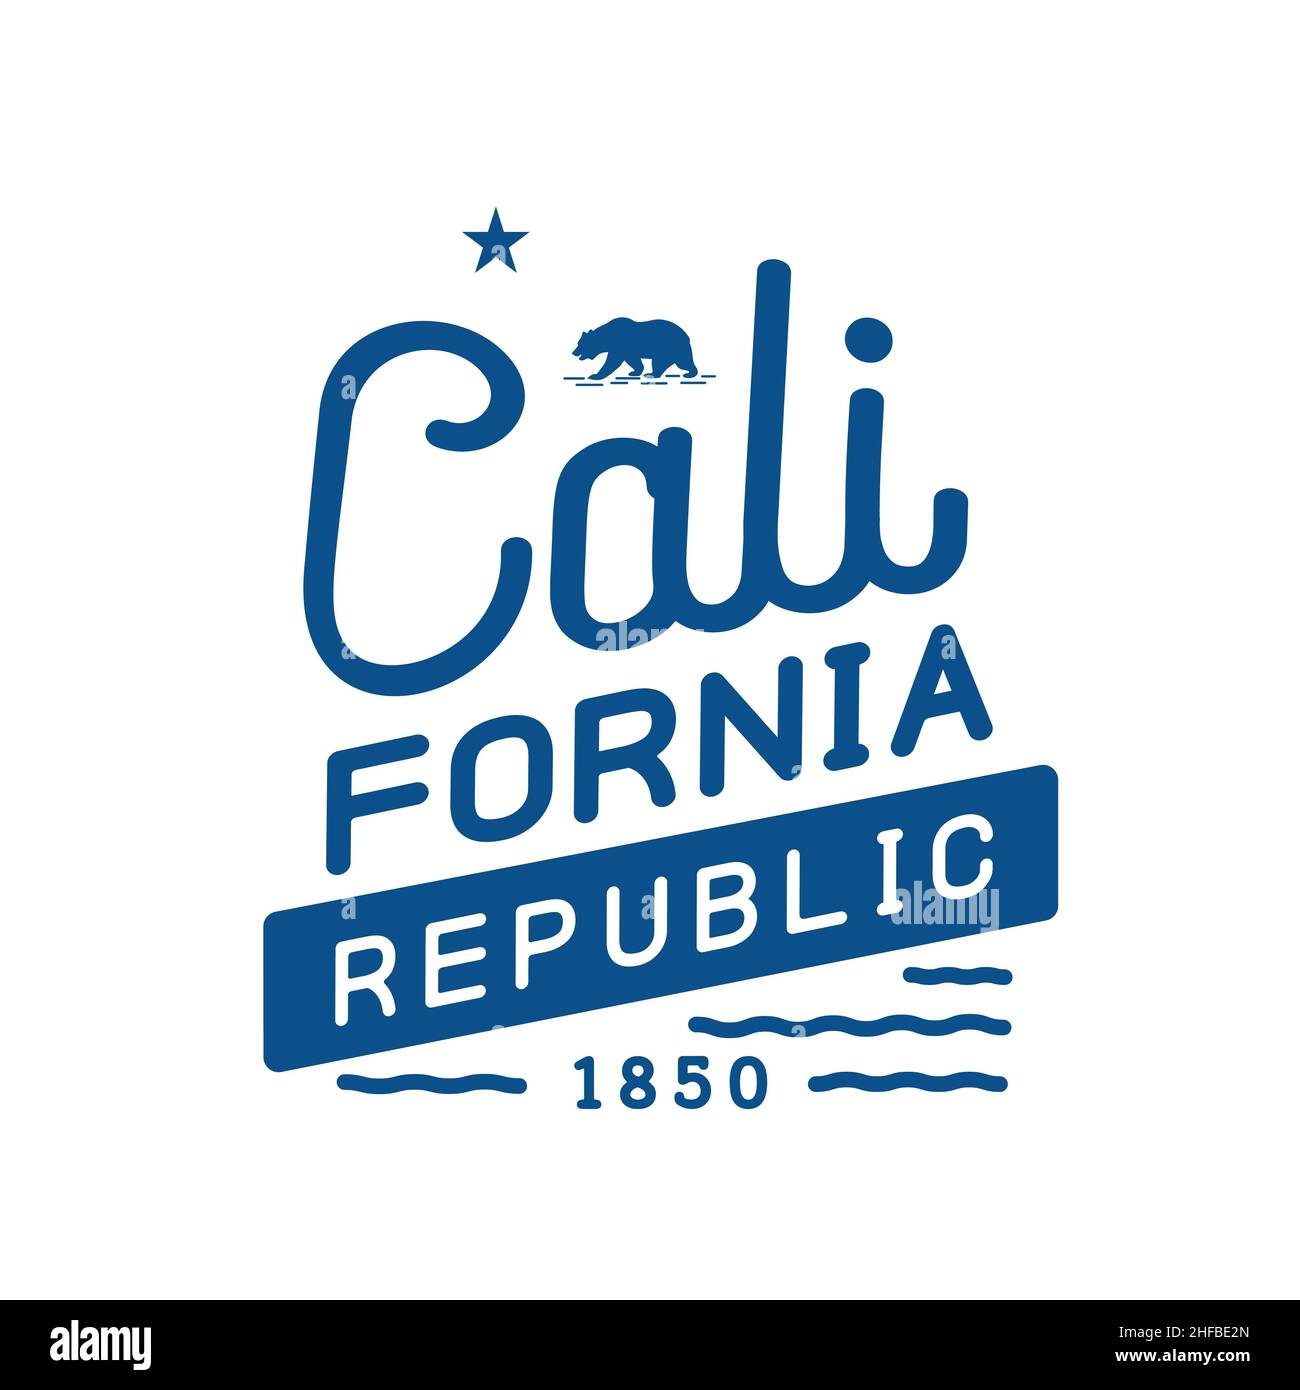 California Republic. California Typography Design Template. Vector and Illustration. Stock Vector